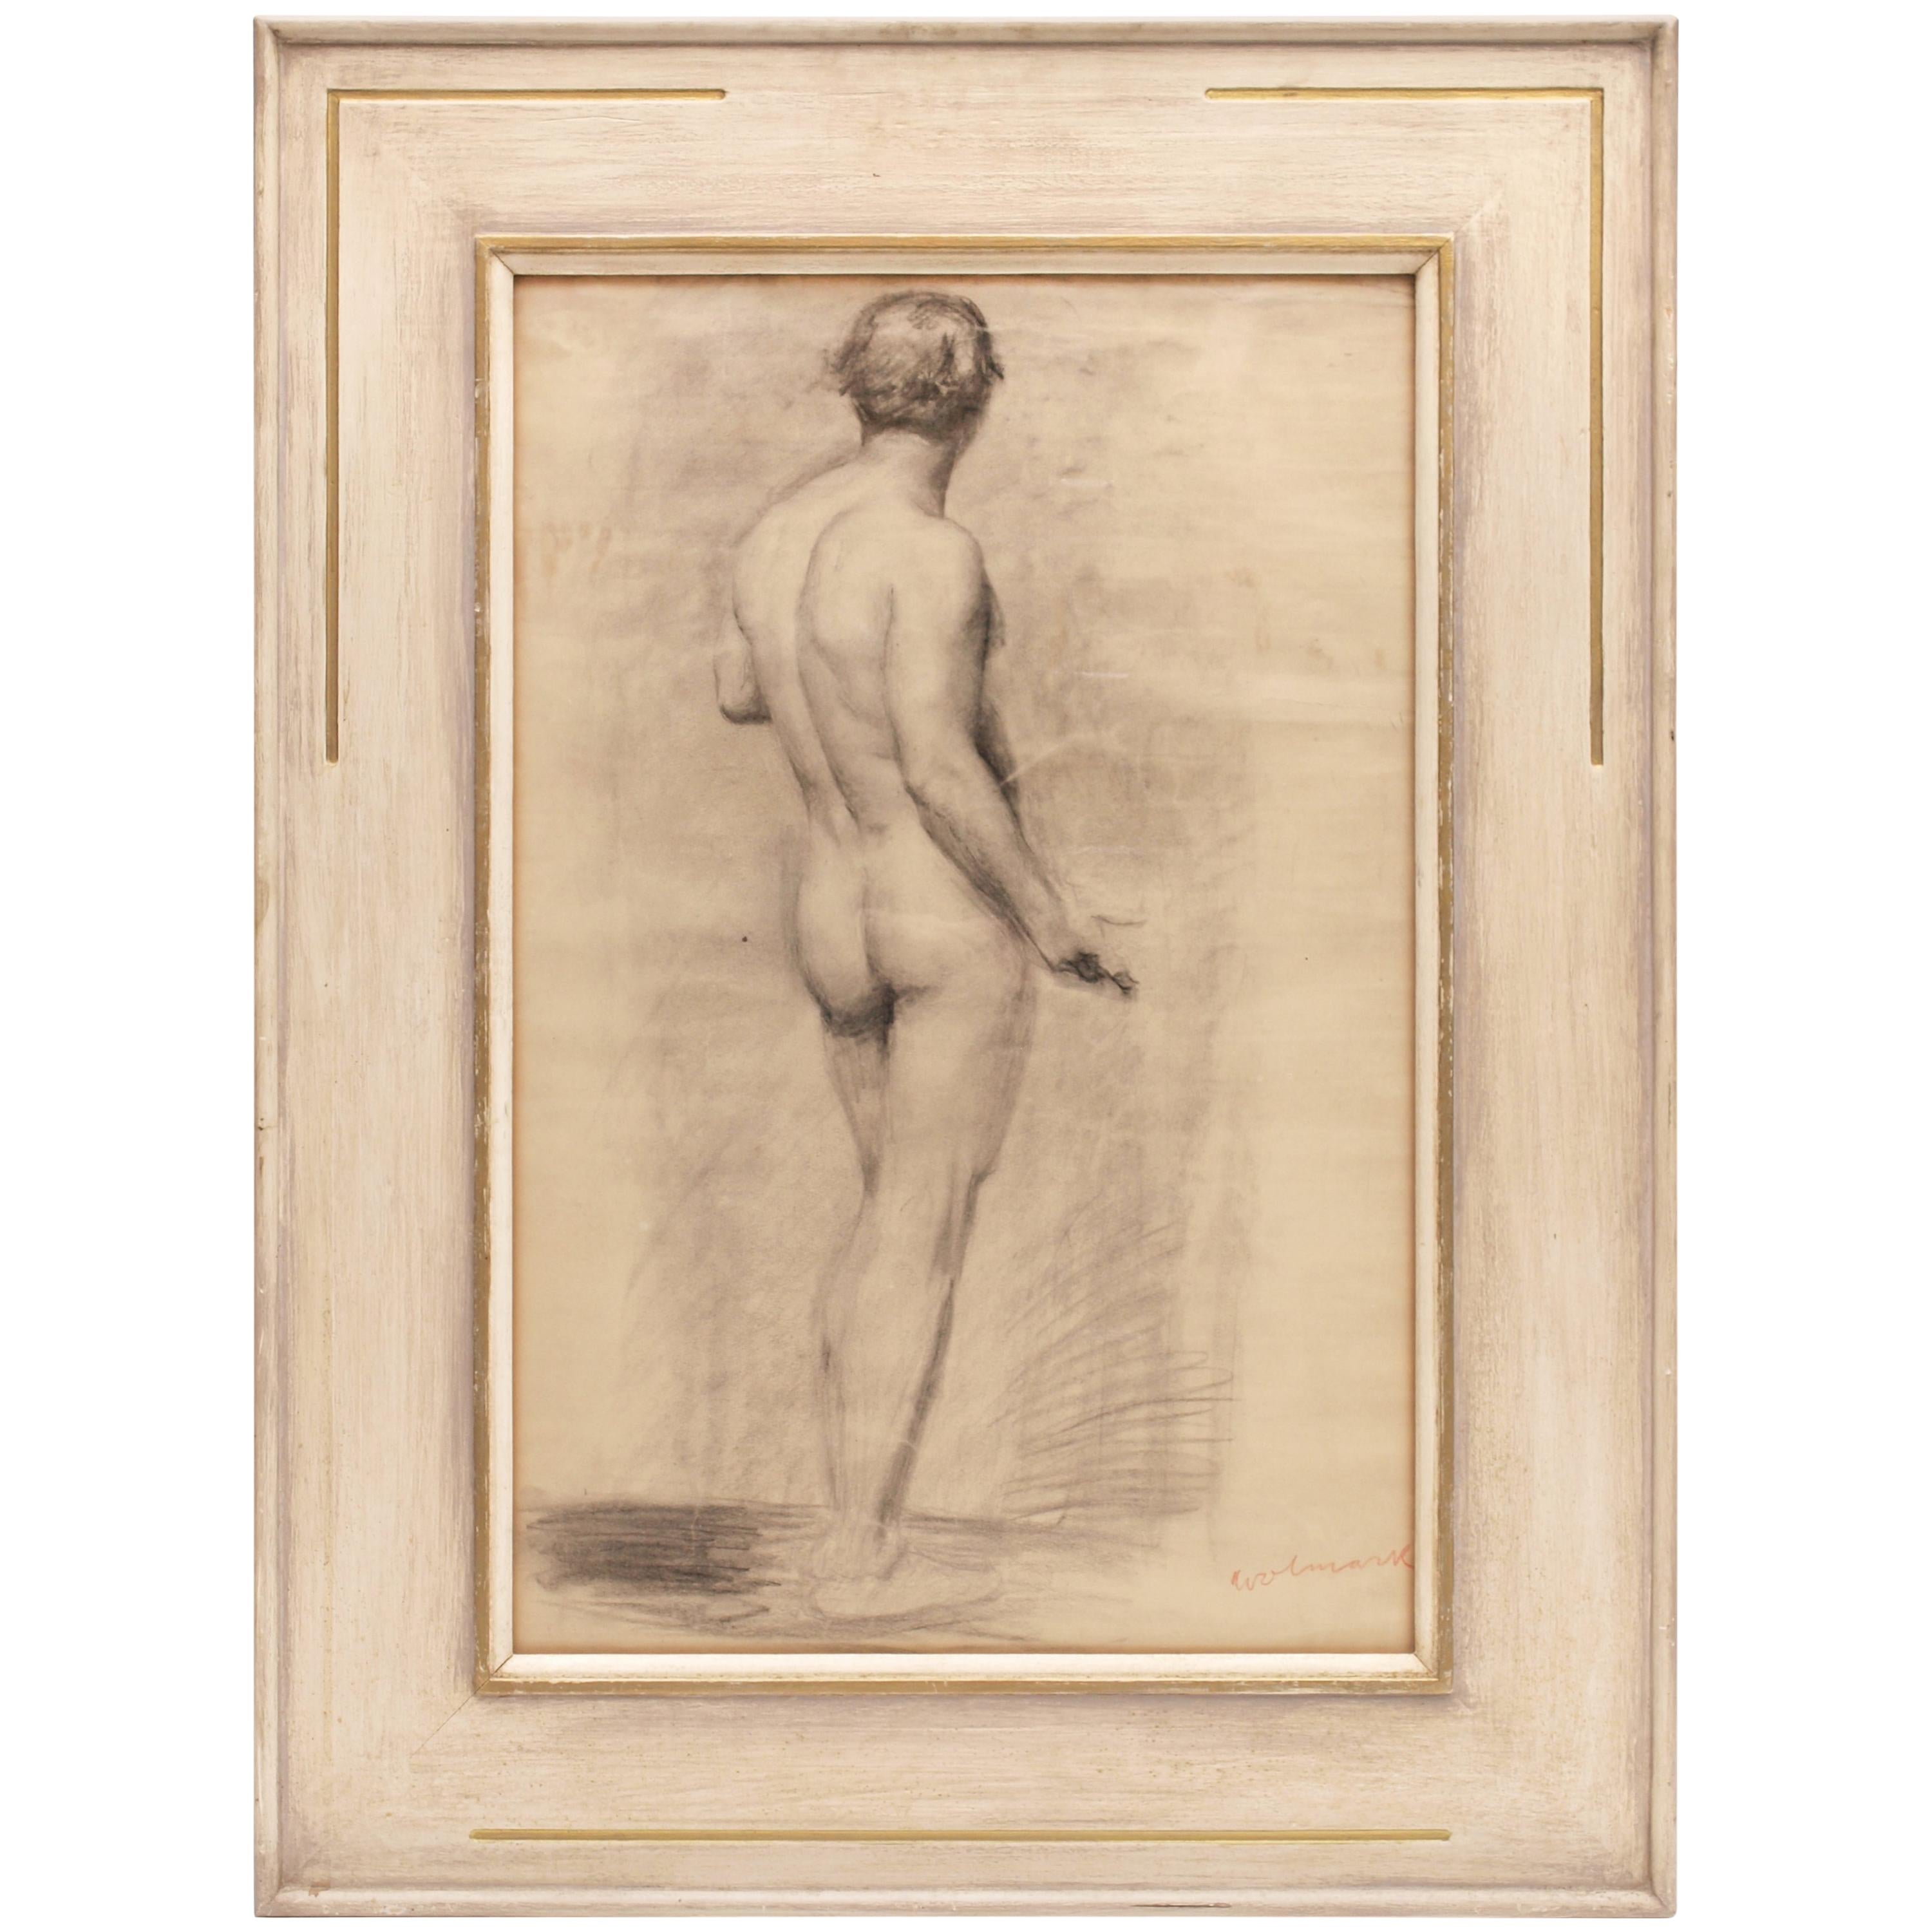 Étude d'un nu masculin par Alfred Aaron Wolmark 1877-1961 